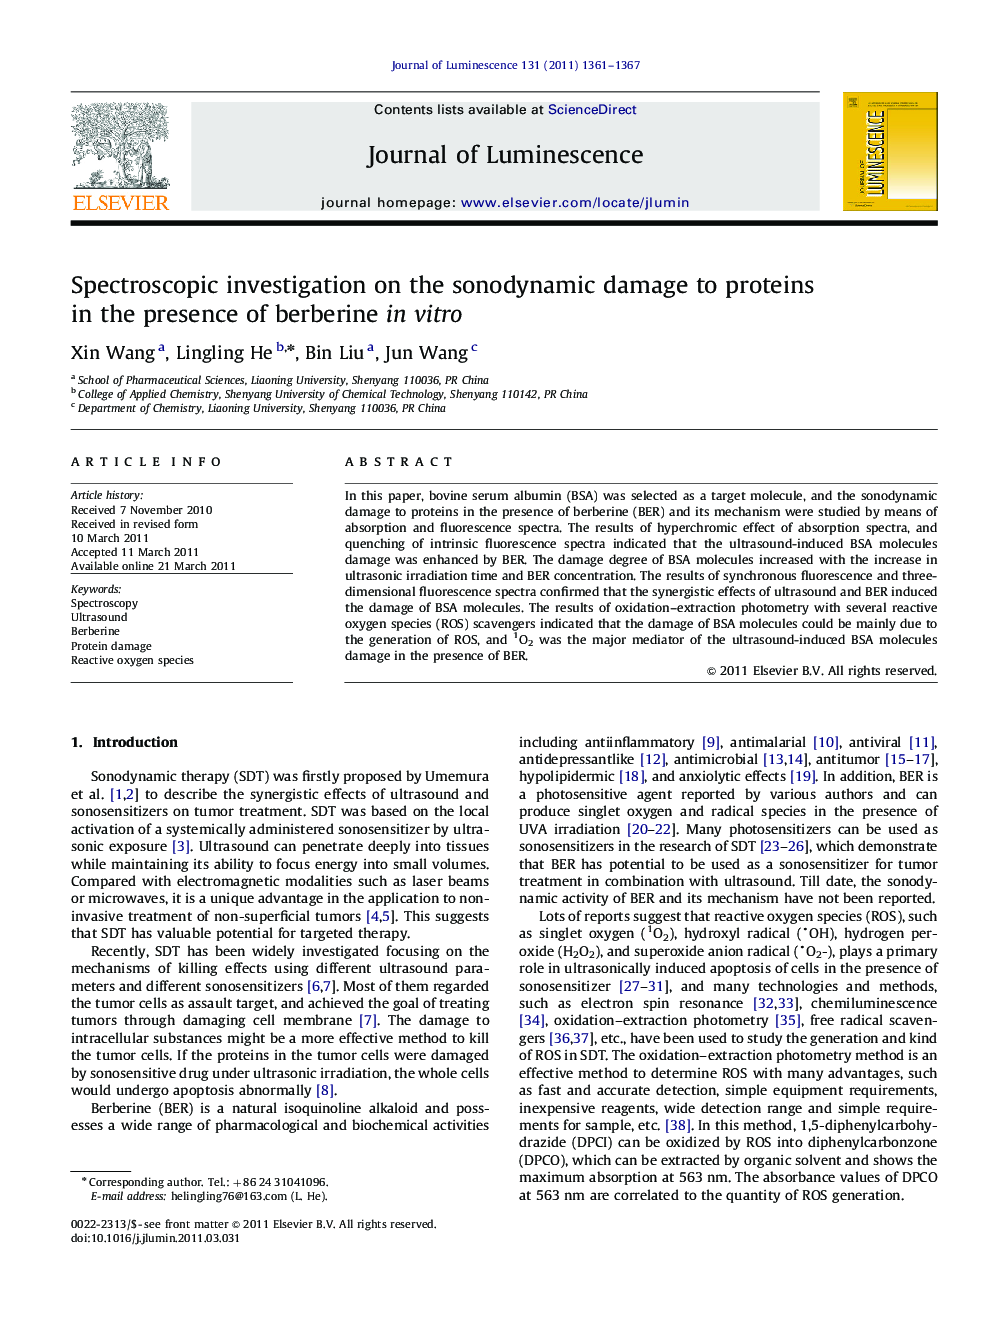 Spectroscopic investigation on the sonodynamic damage to proteins in the presence of berberine in vitro